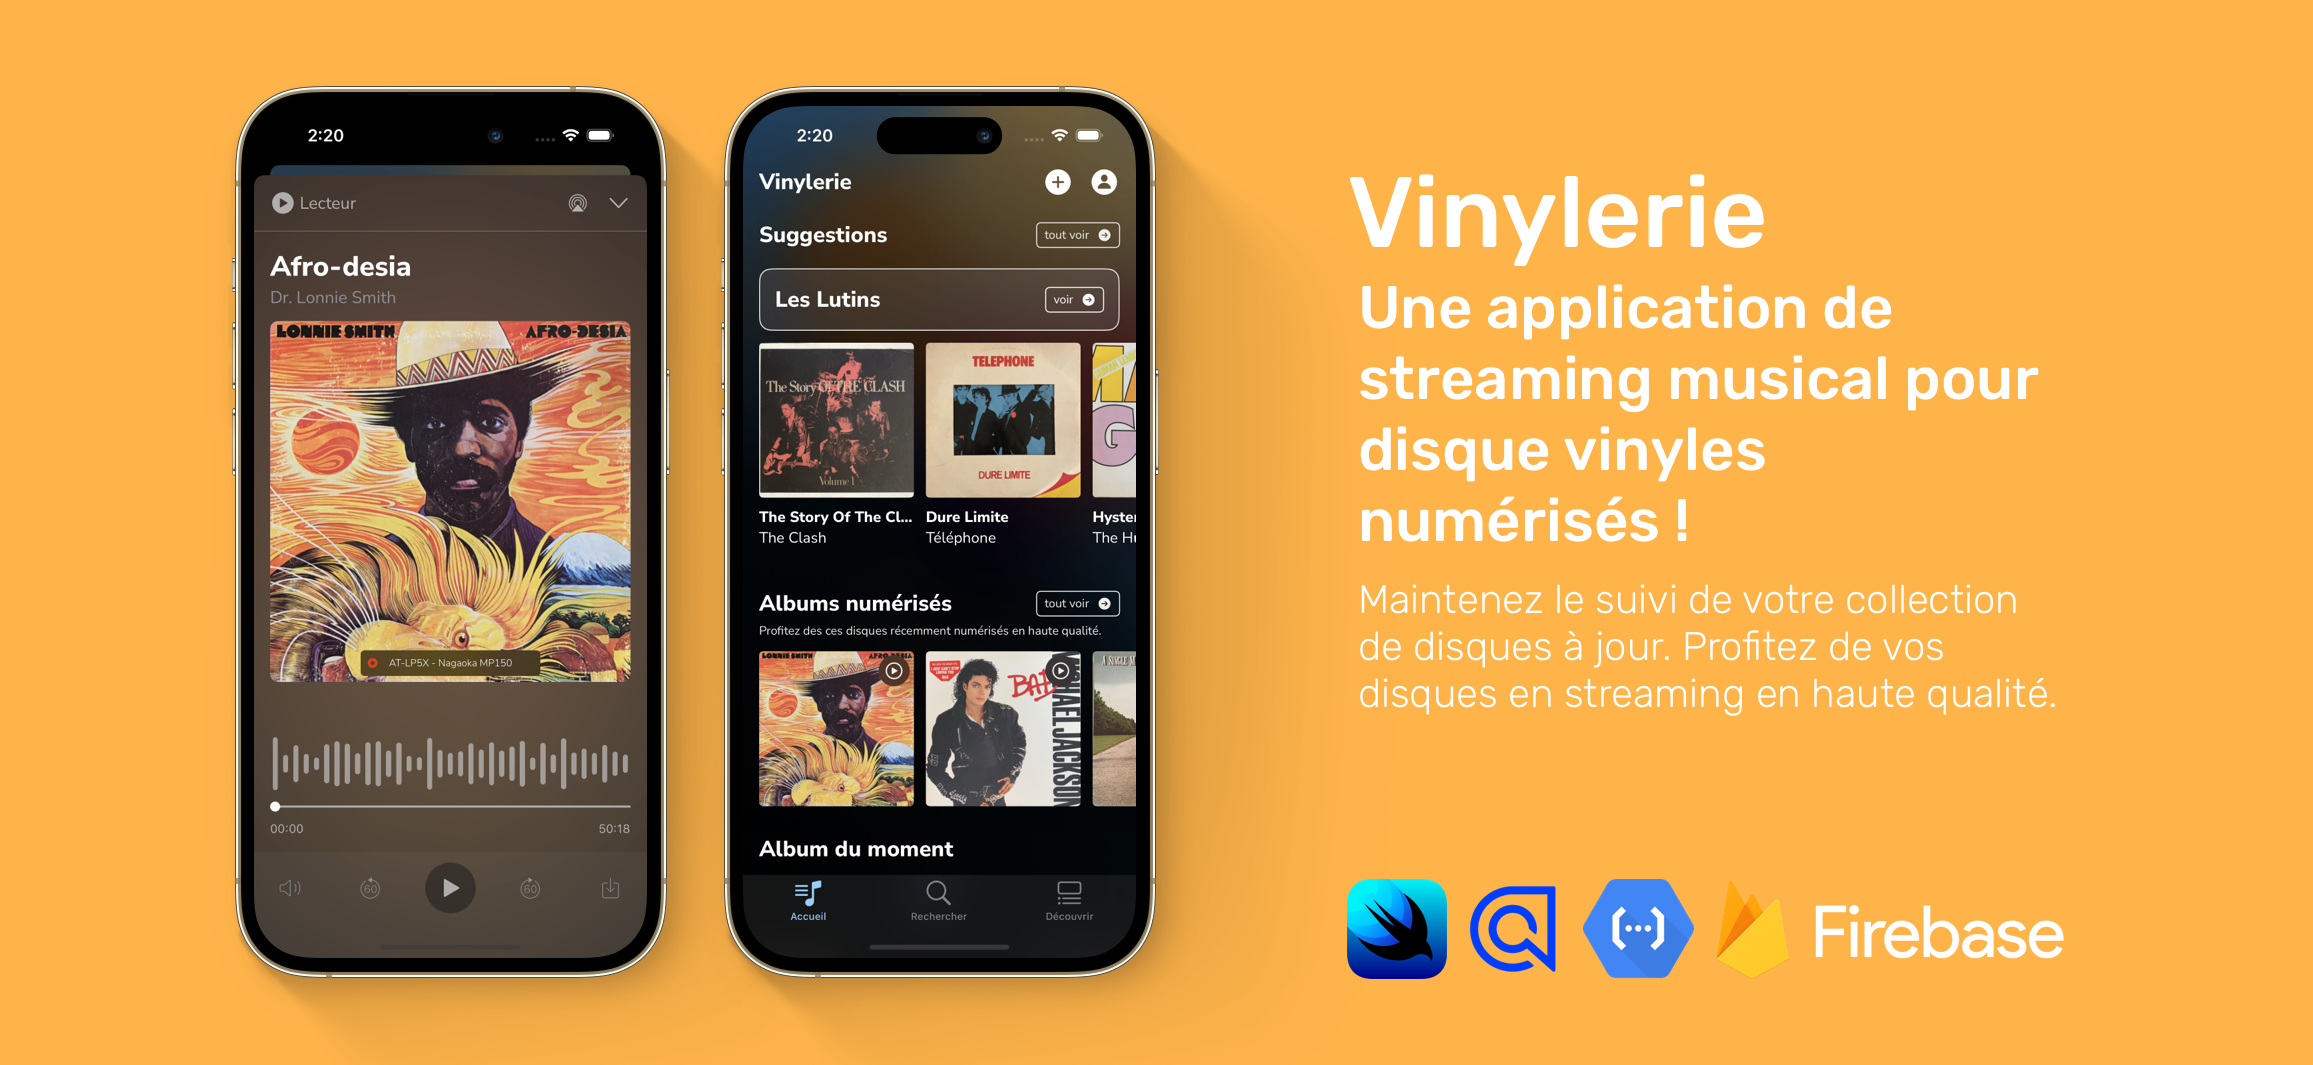 vinylerie app showcase